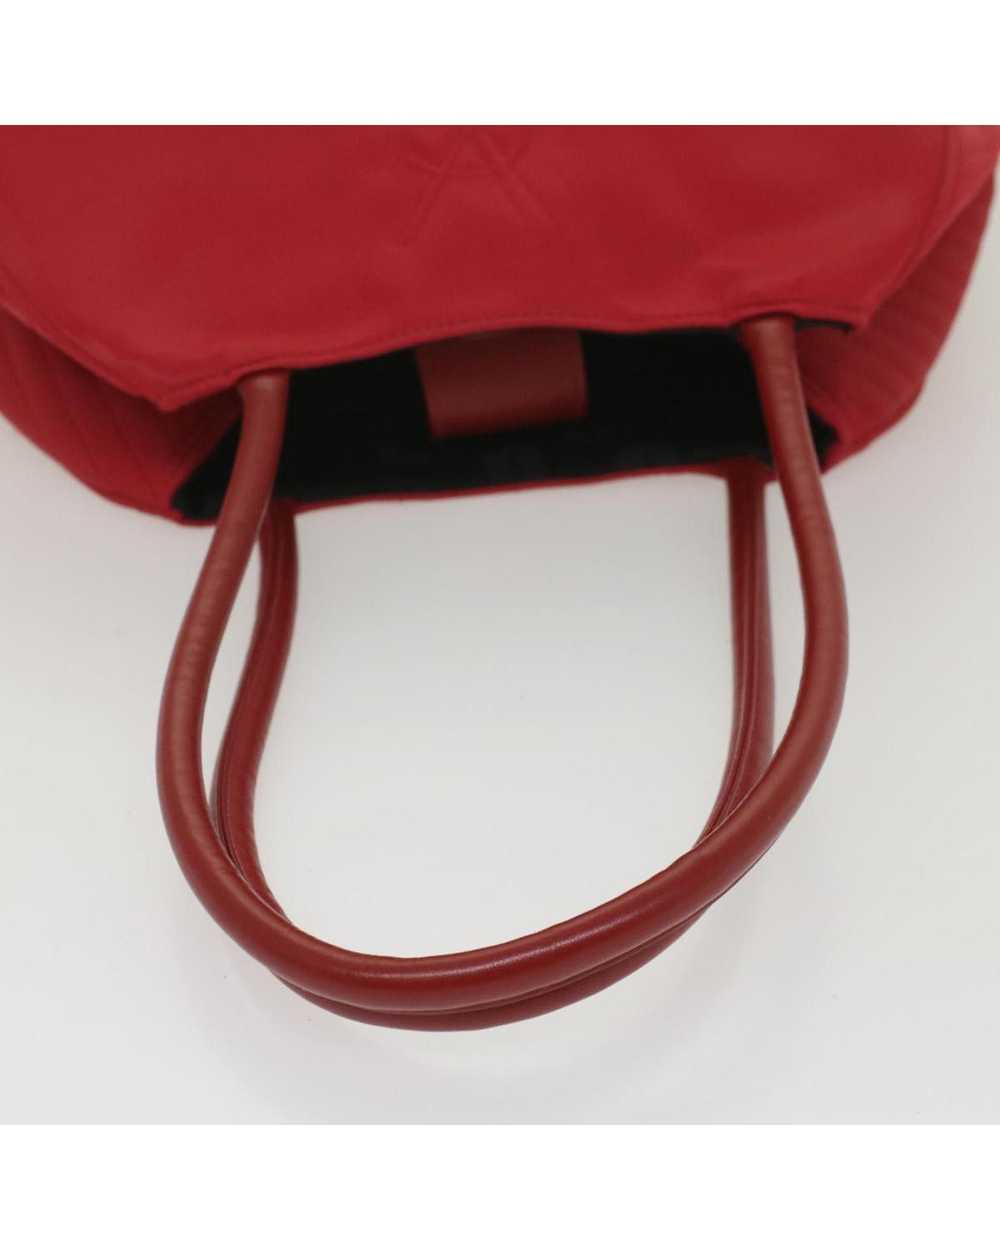 Yves Saint Laurent Red Leather Shoulder Bag with … - image 7